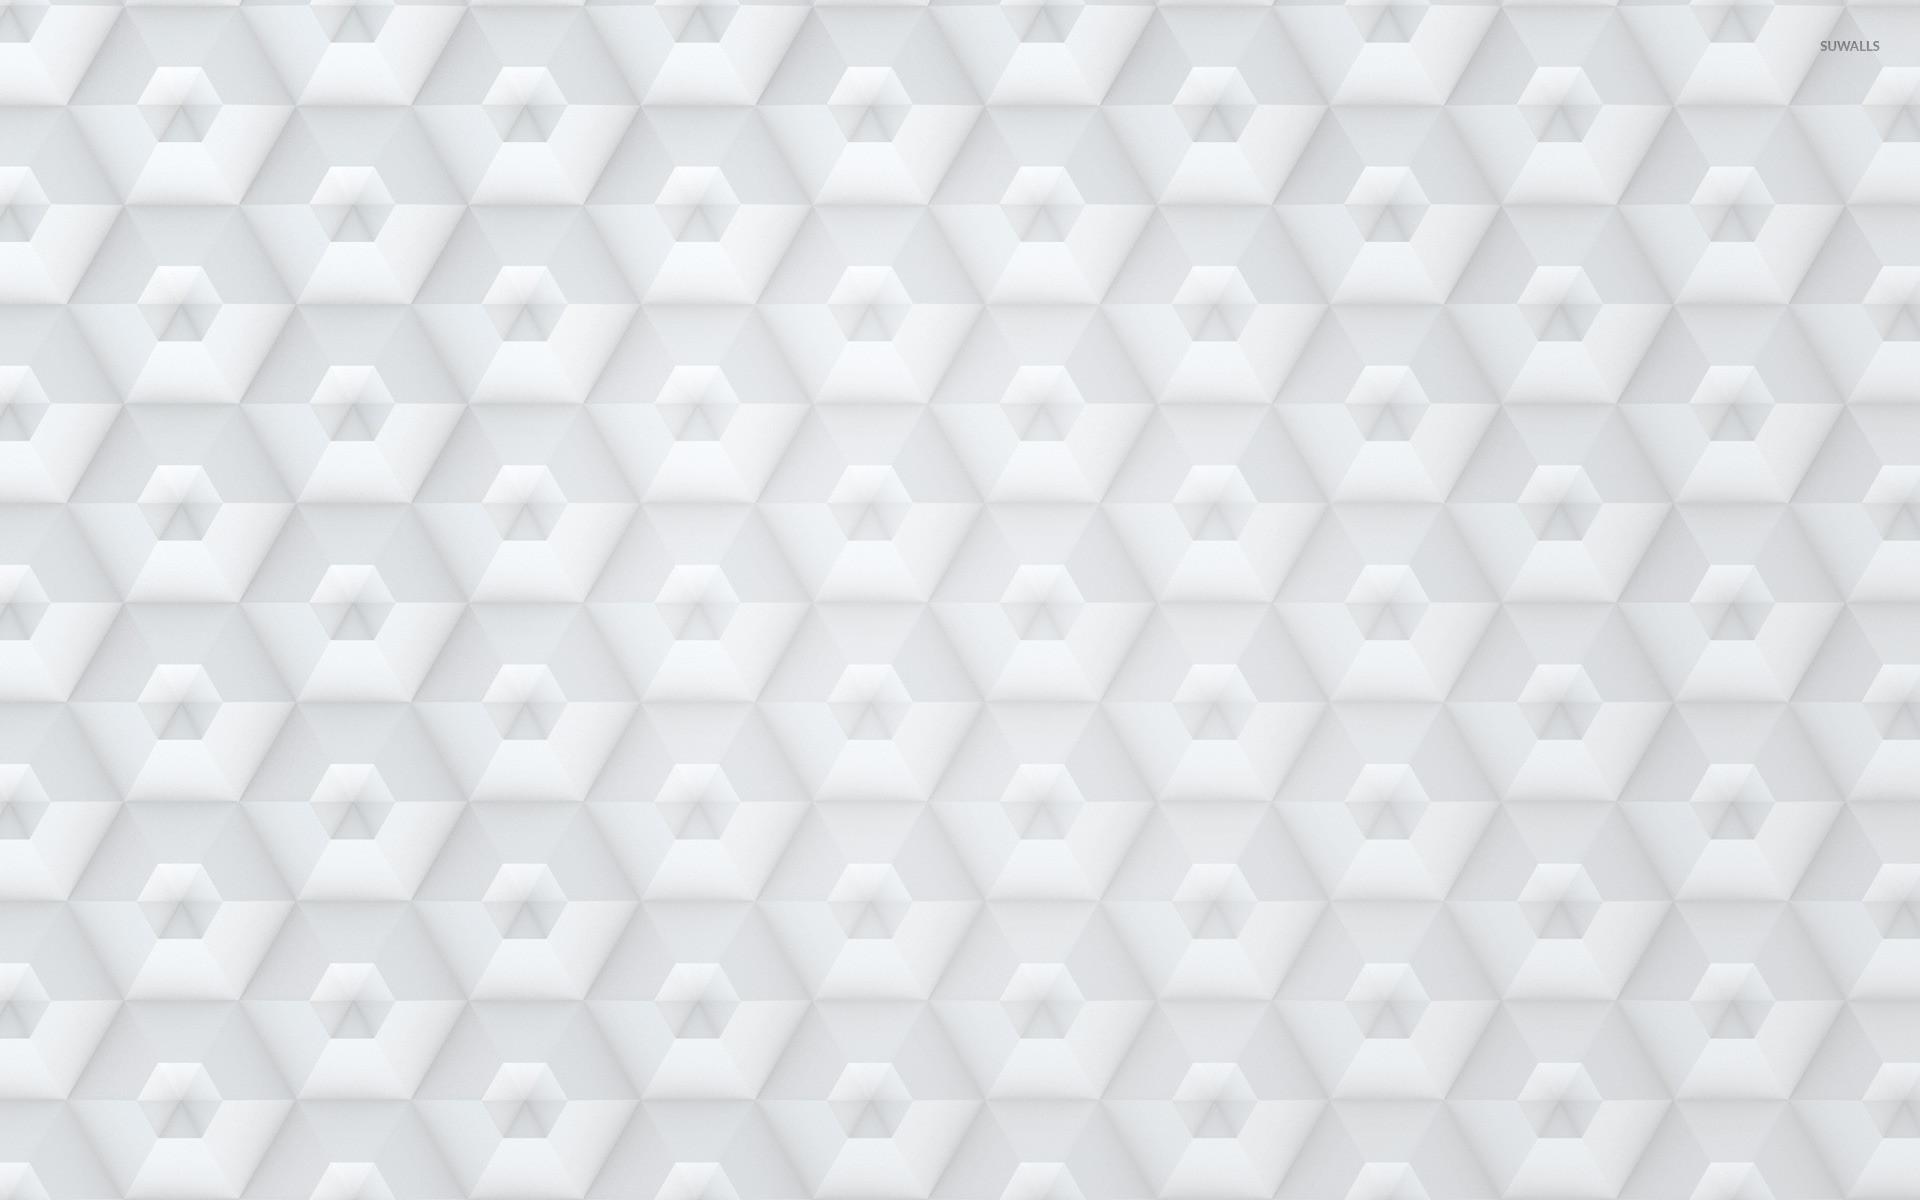 Black Hexagon Wallpaper